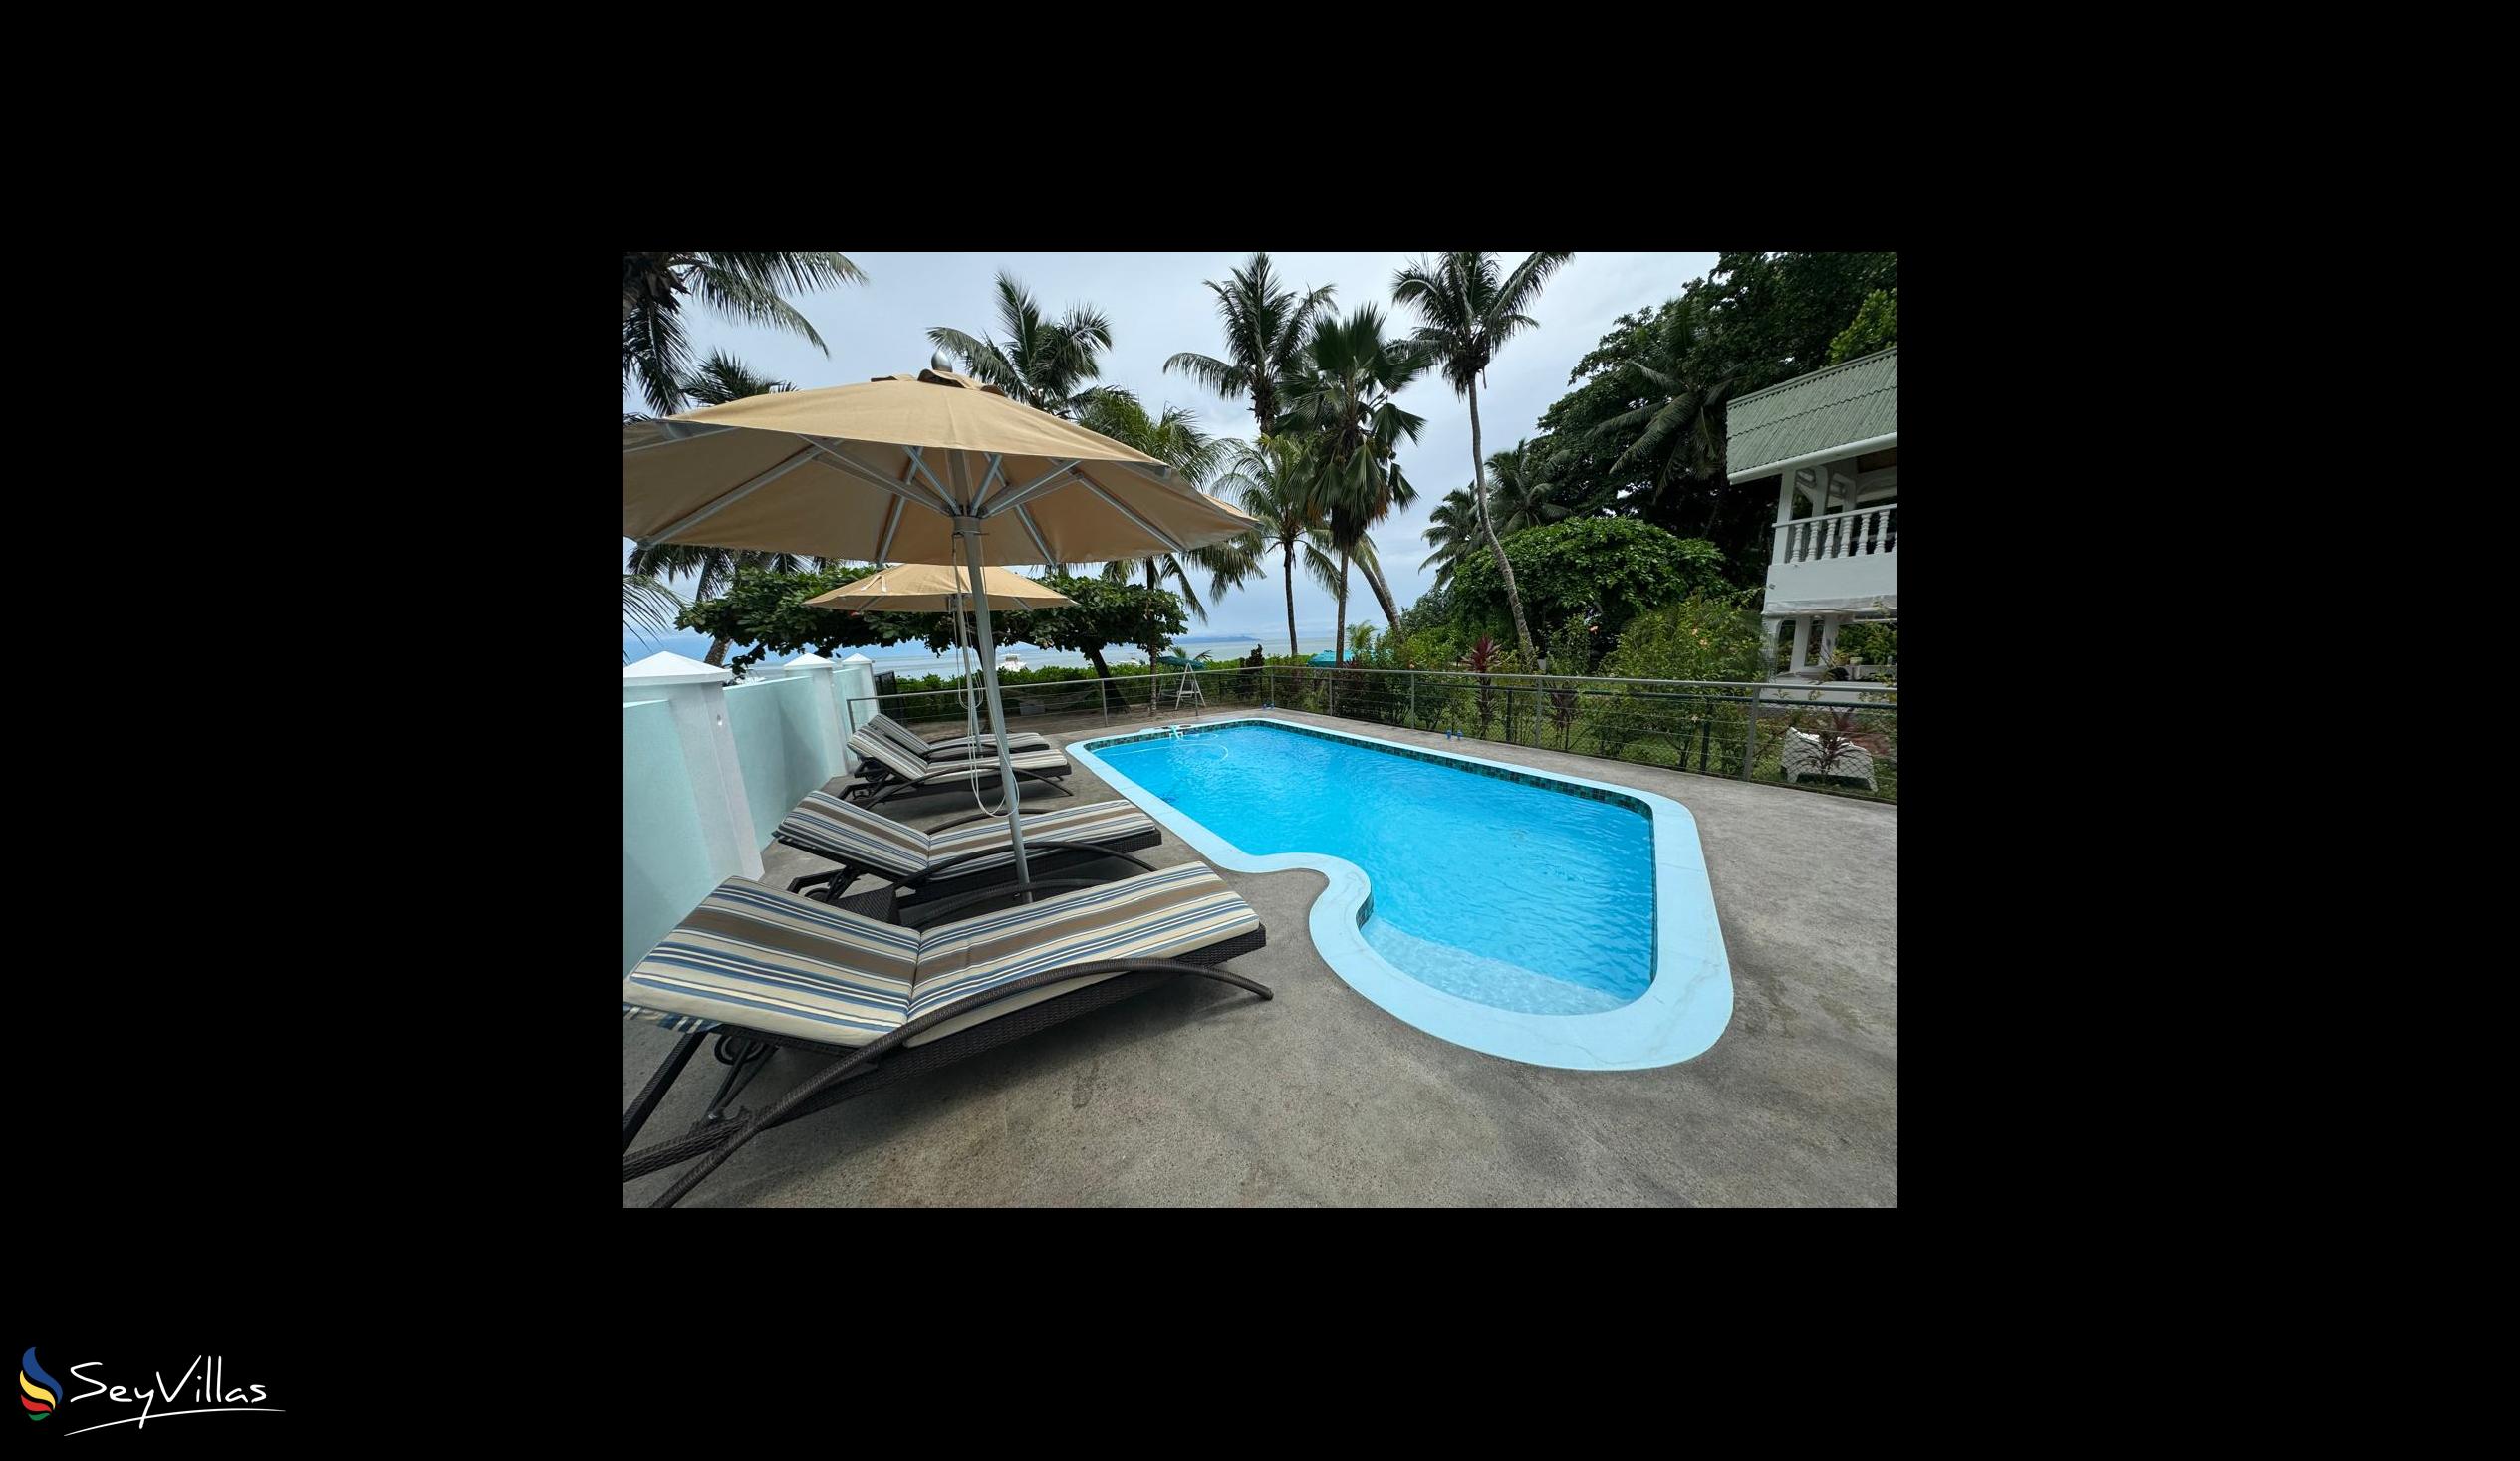 Photo 8: Ocean Villa - Outdoor area - Praslin (Seychelles)